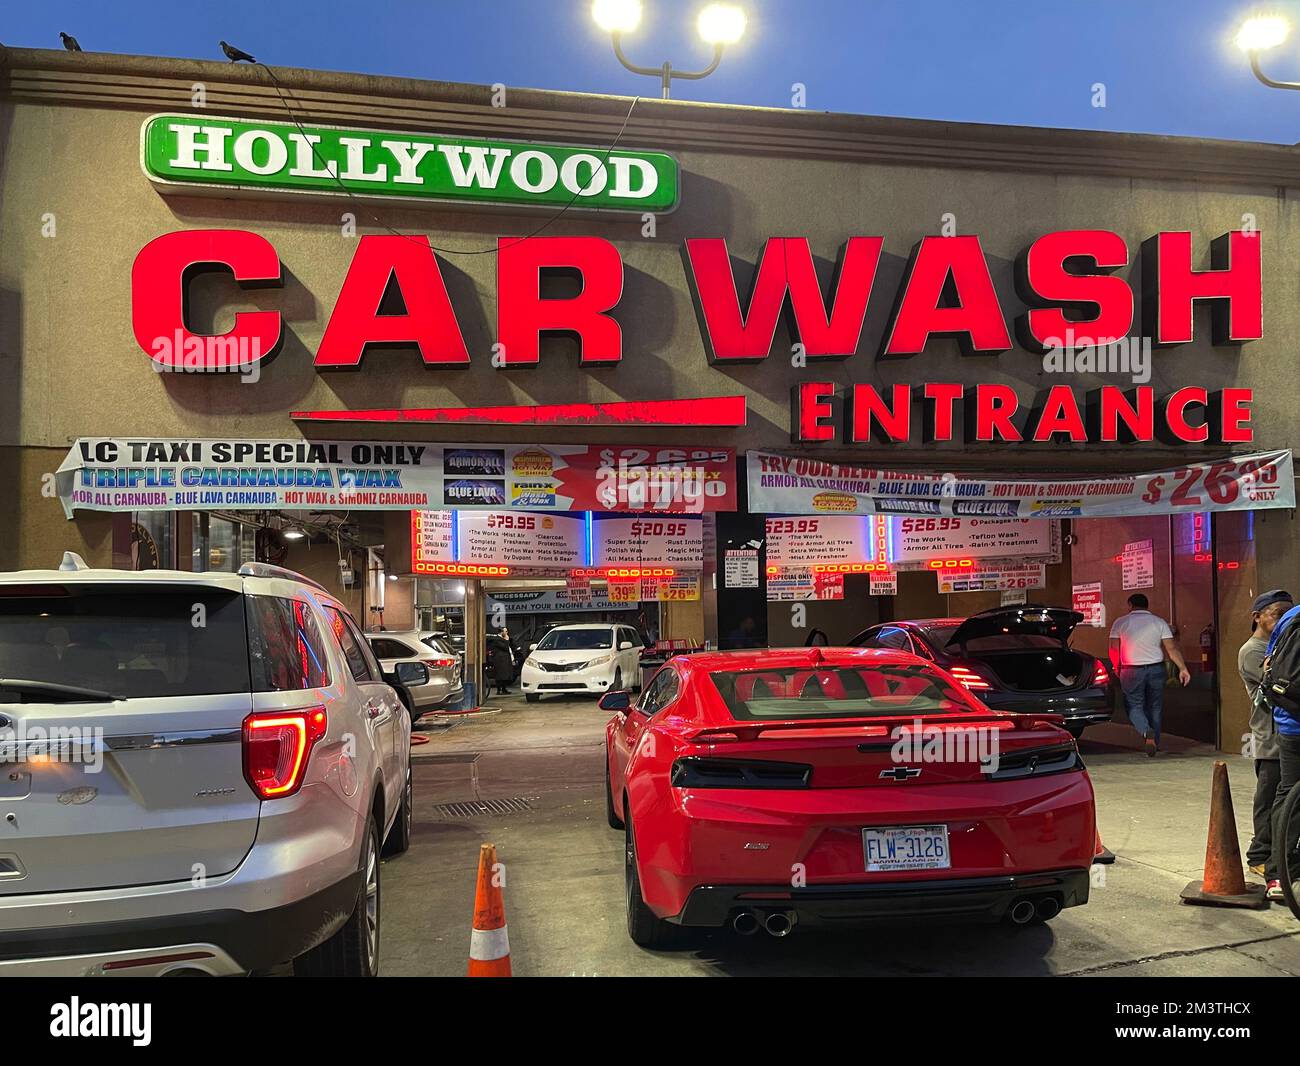 Hollywood car wash entrance in Flatbush neighborhood in Brooklyn NYC Stock Photo